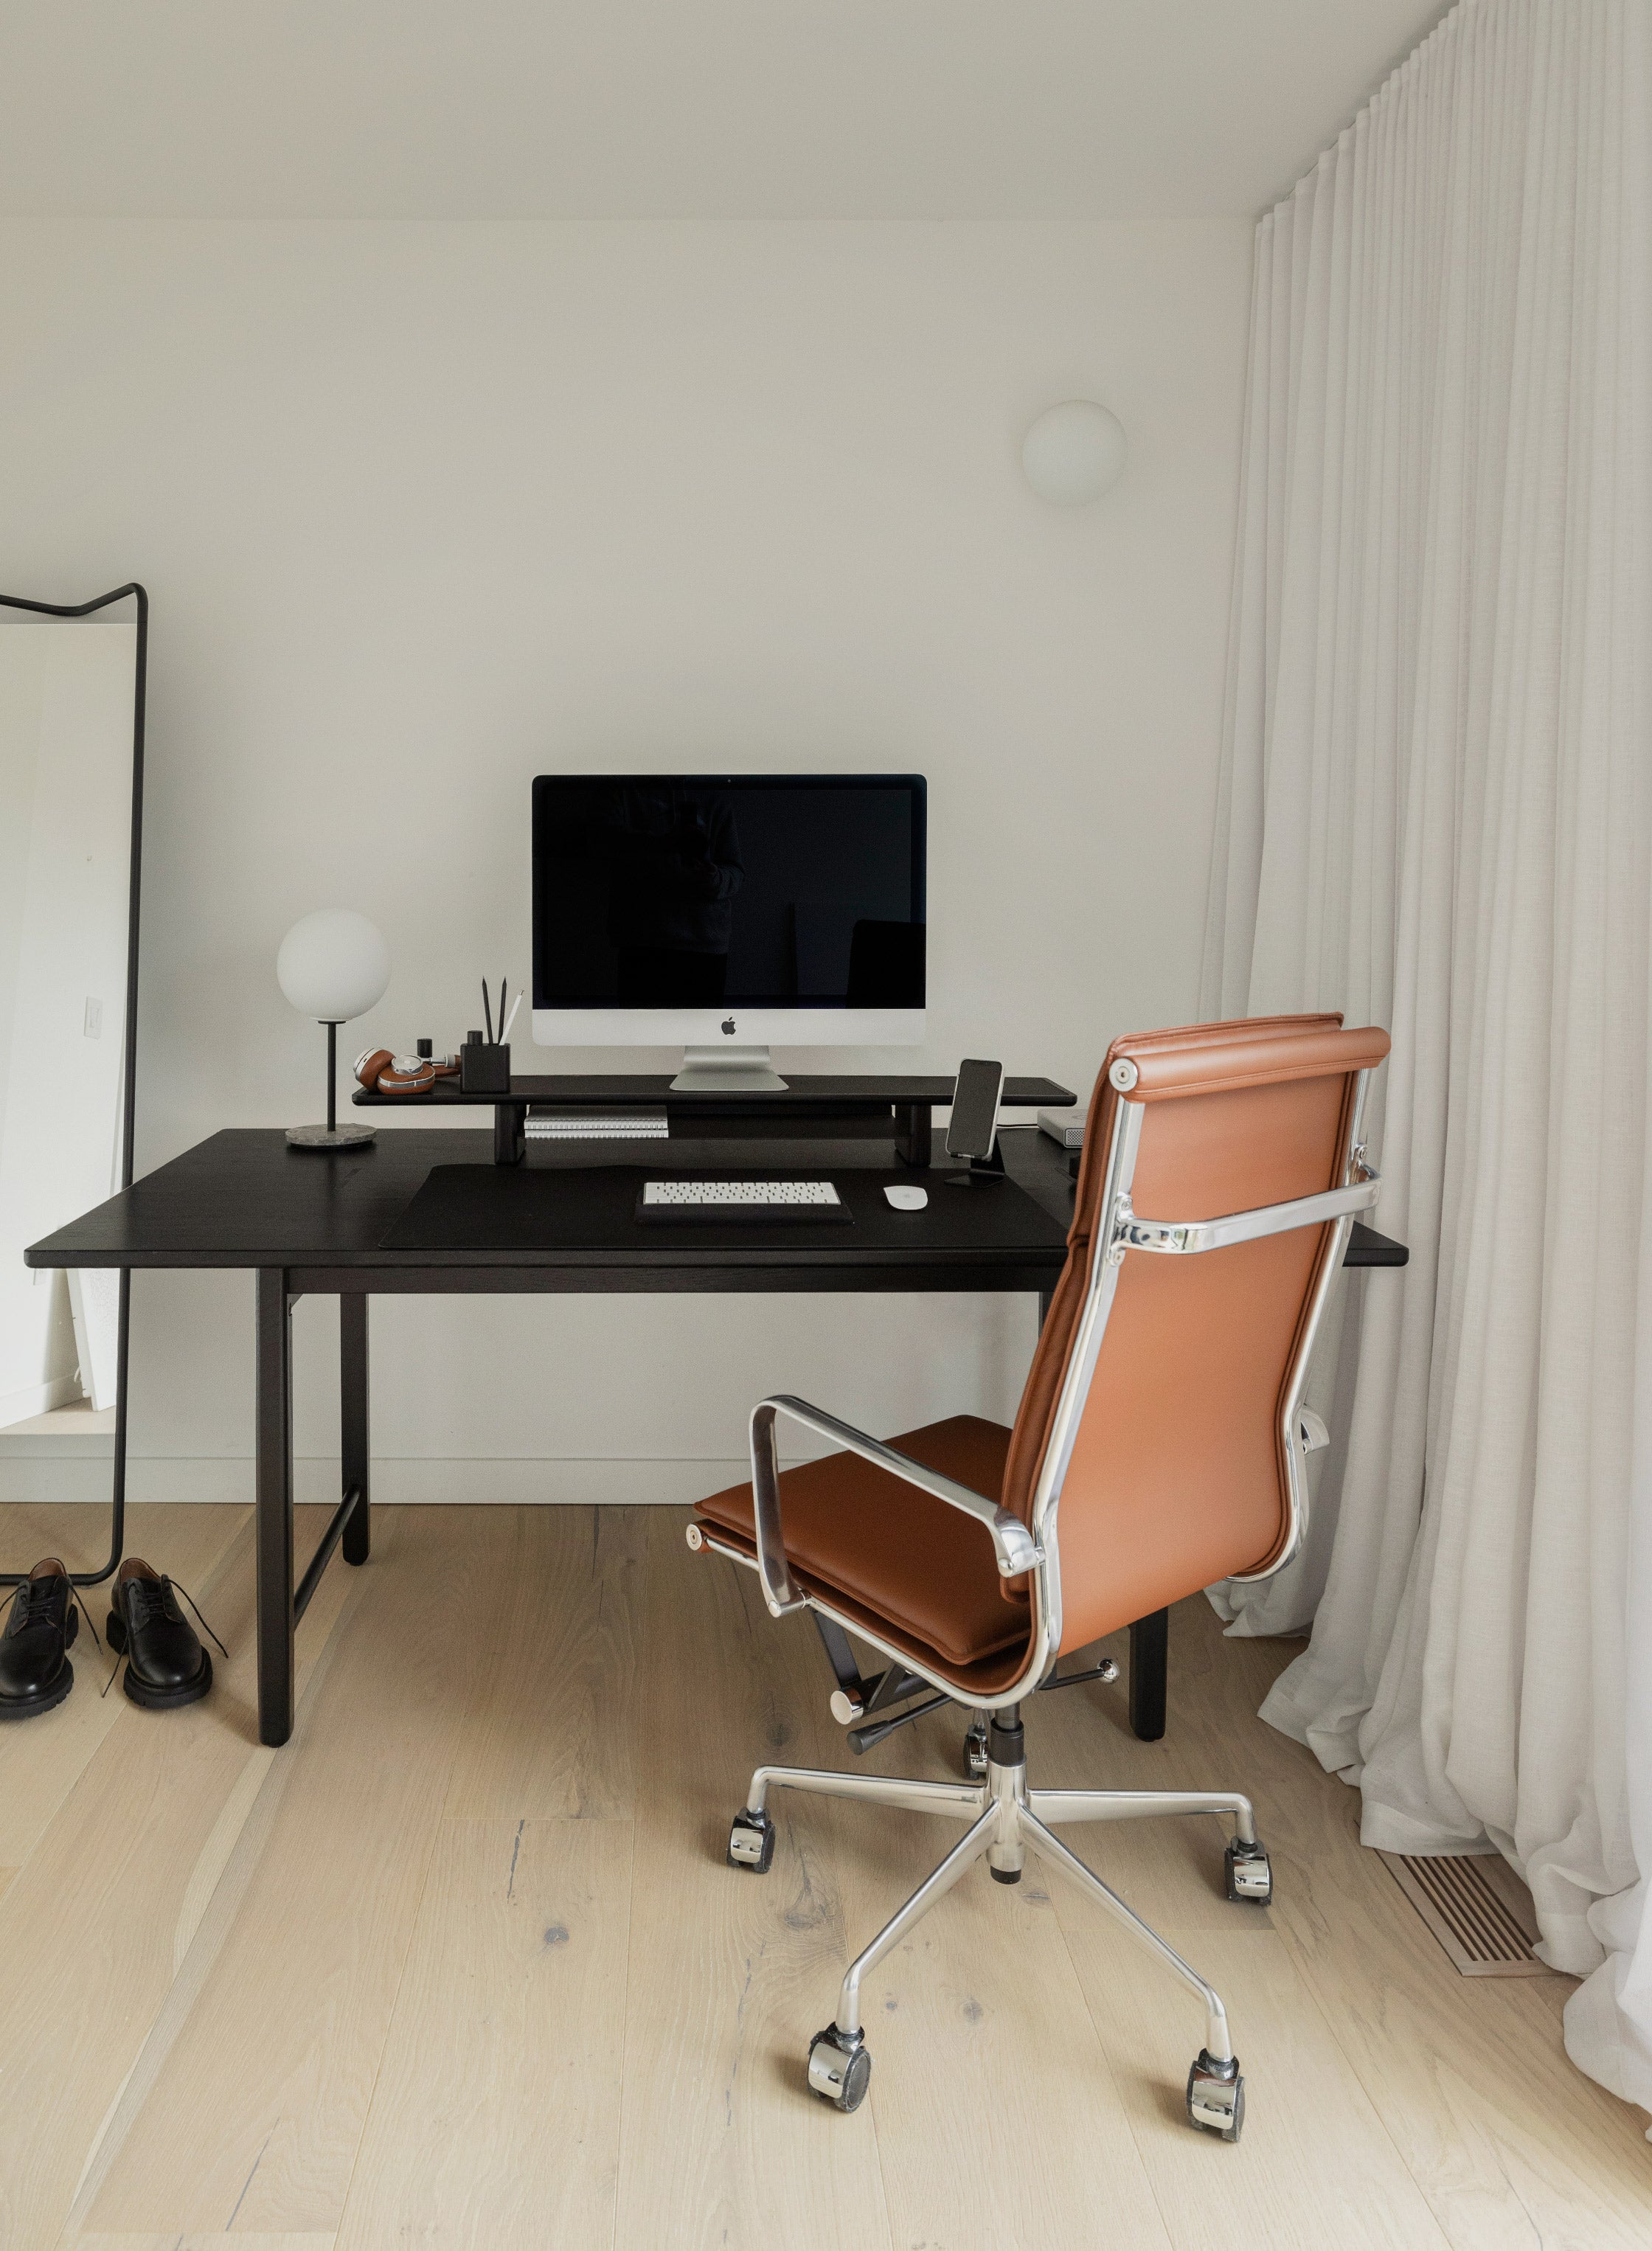 Black Executive Desk in minimalist home office